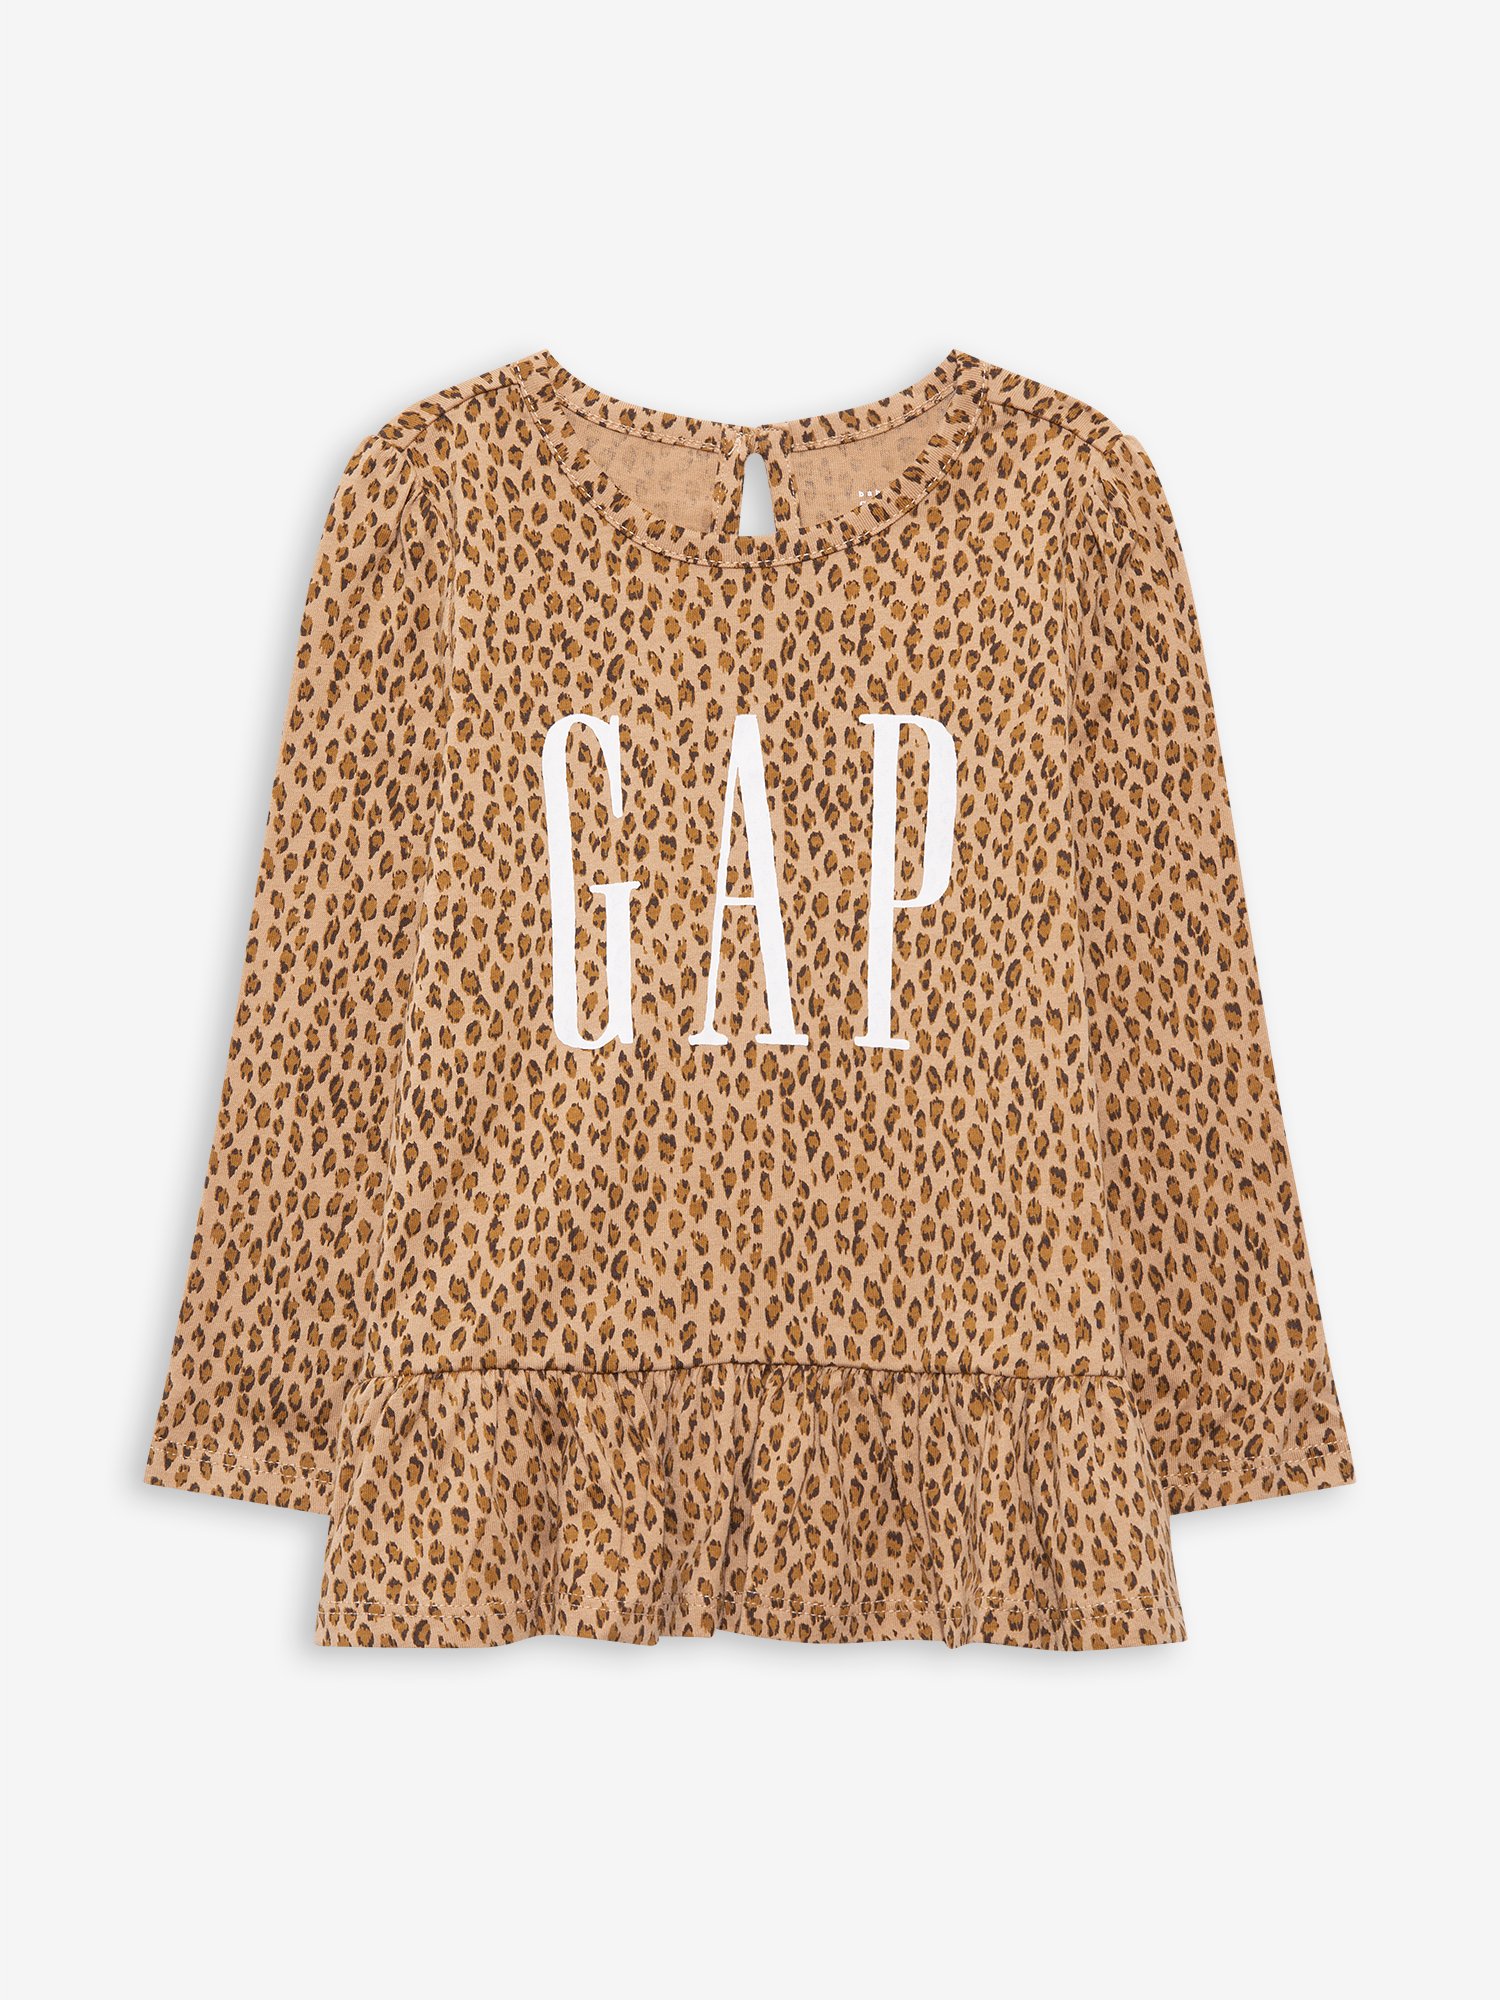 Gap Logo Fırfır Detaylı T-Shirt product image